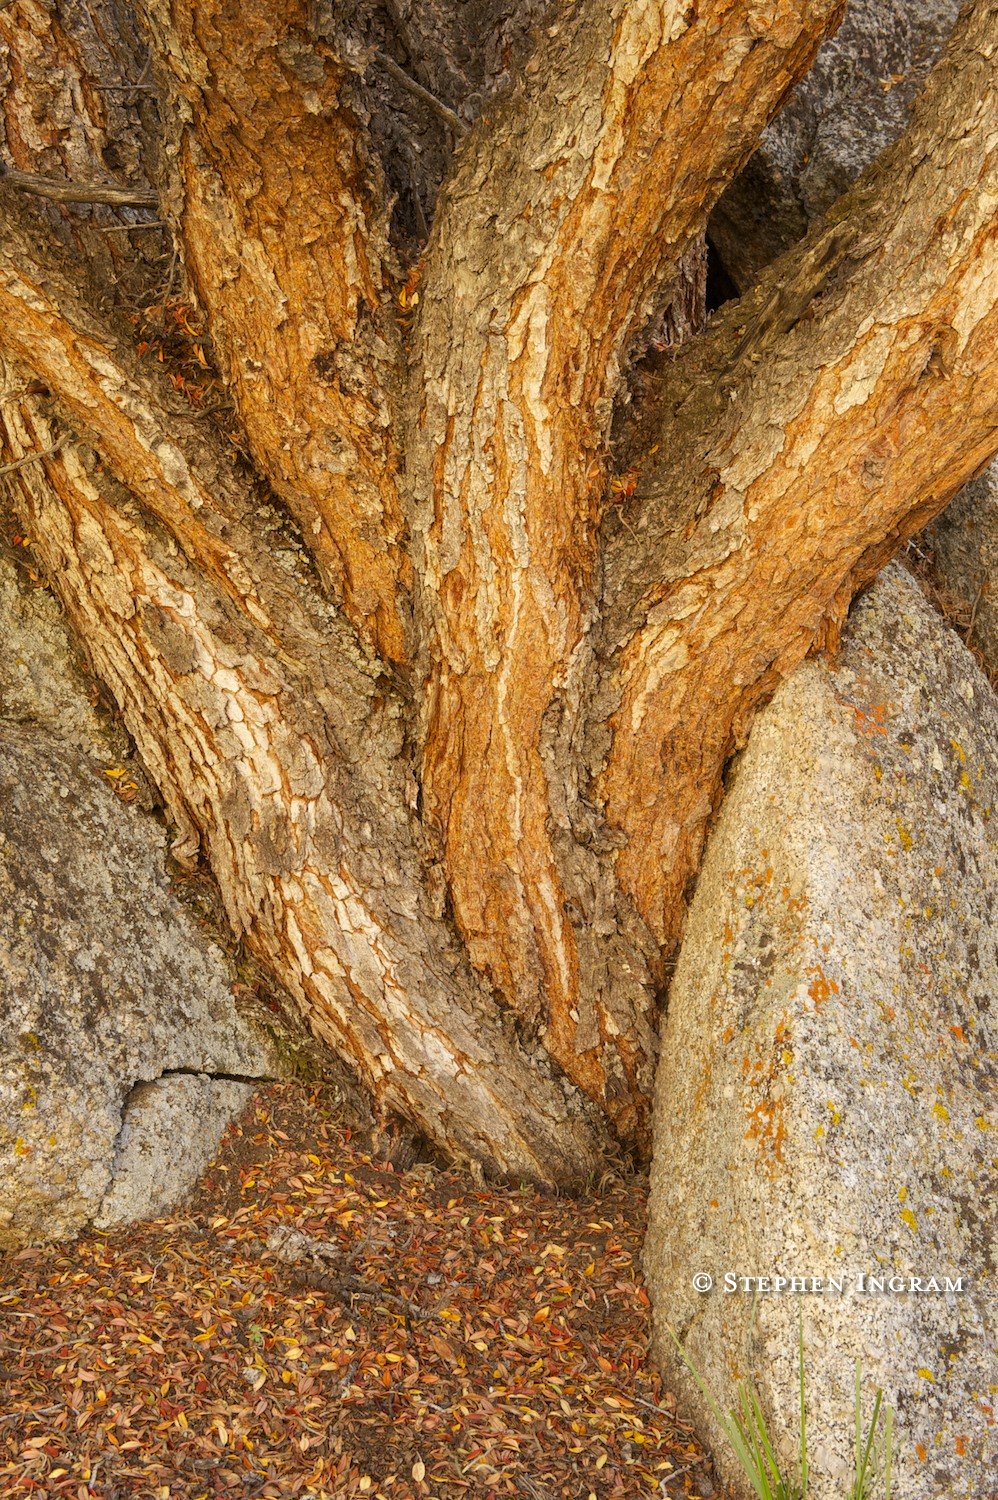 Mountain mahogany trunks among granite rocks, White Mountains, CA